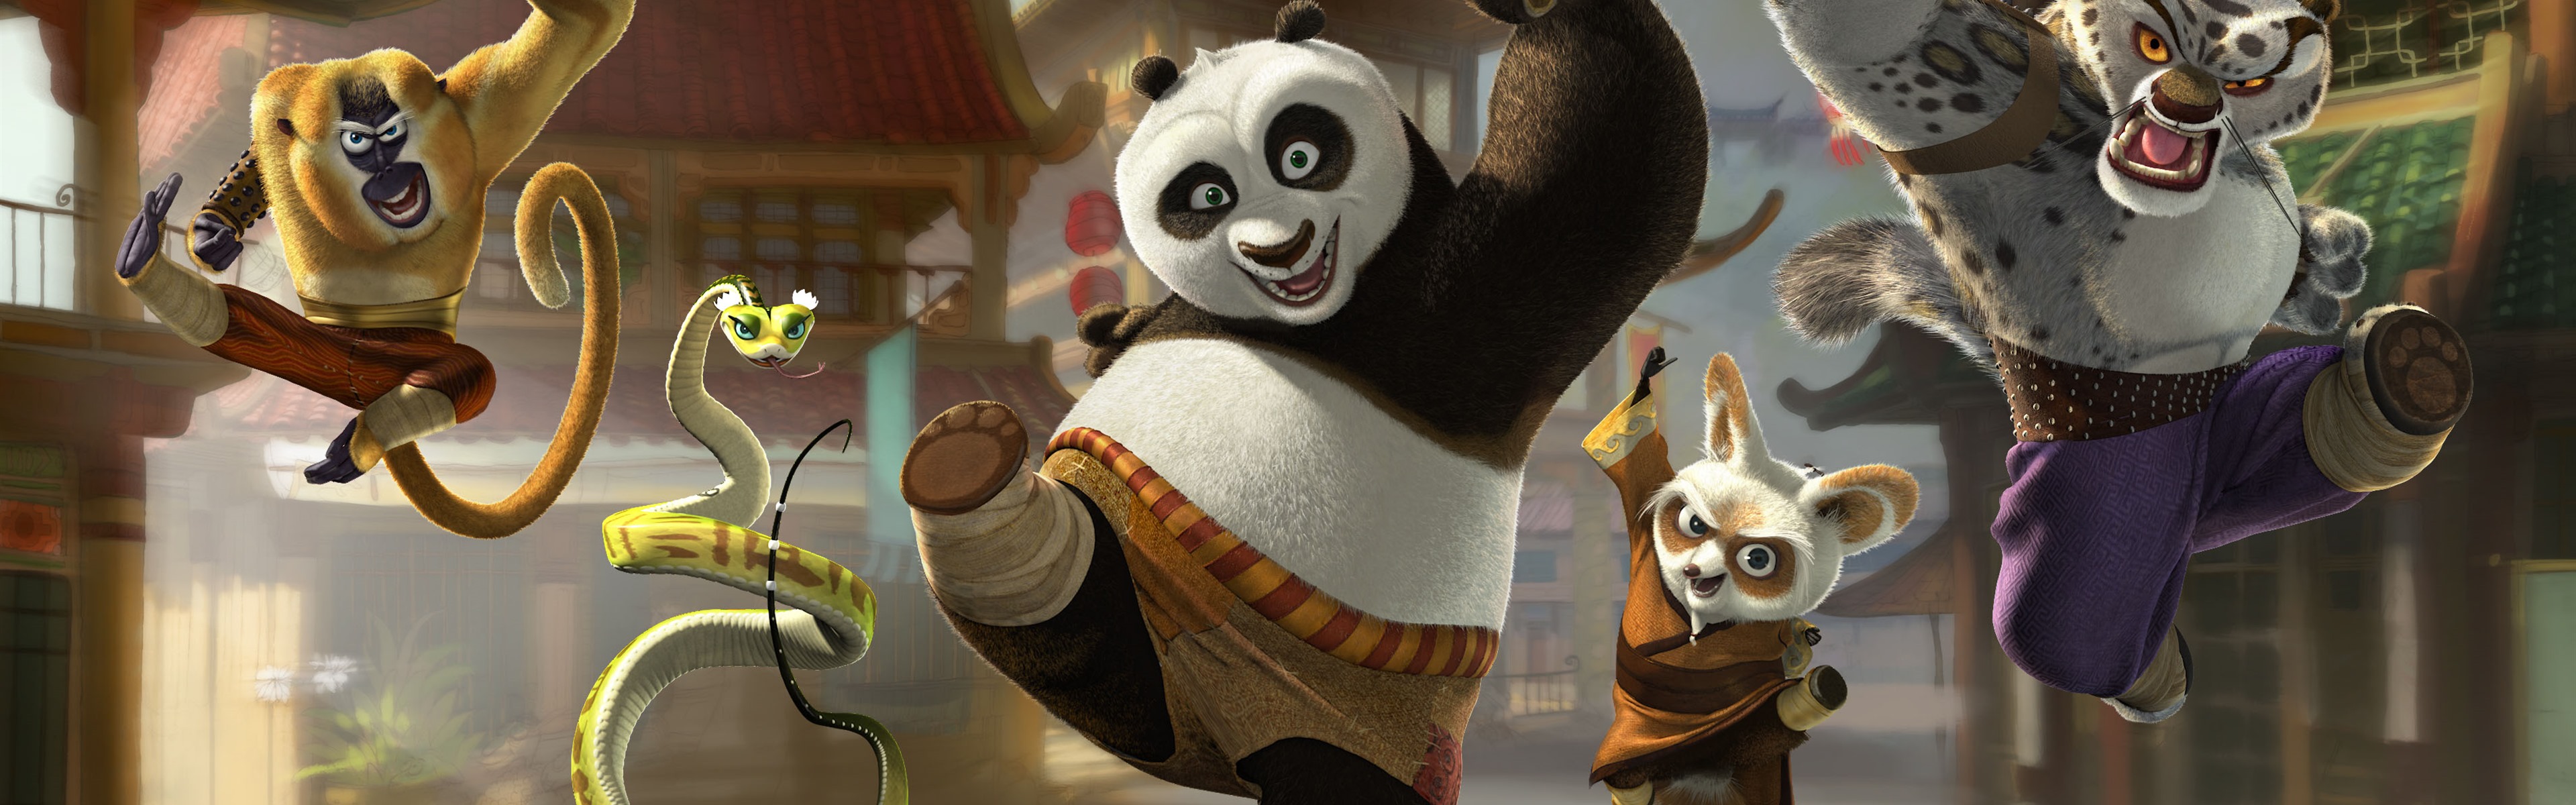 Kung Fu Panda 3, fondos de pantalla de alta definición de películas #15 - 3840x1200